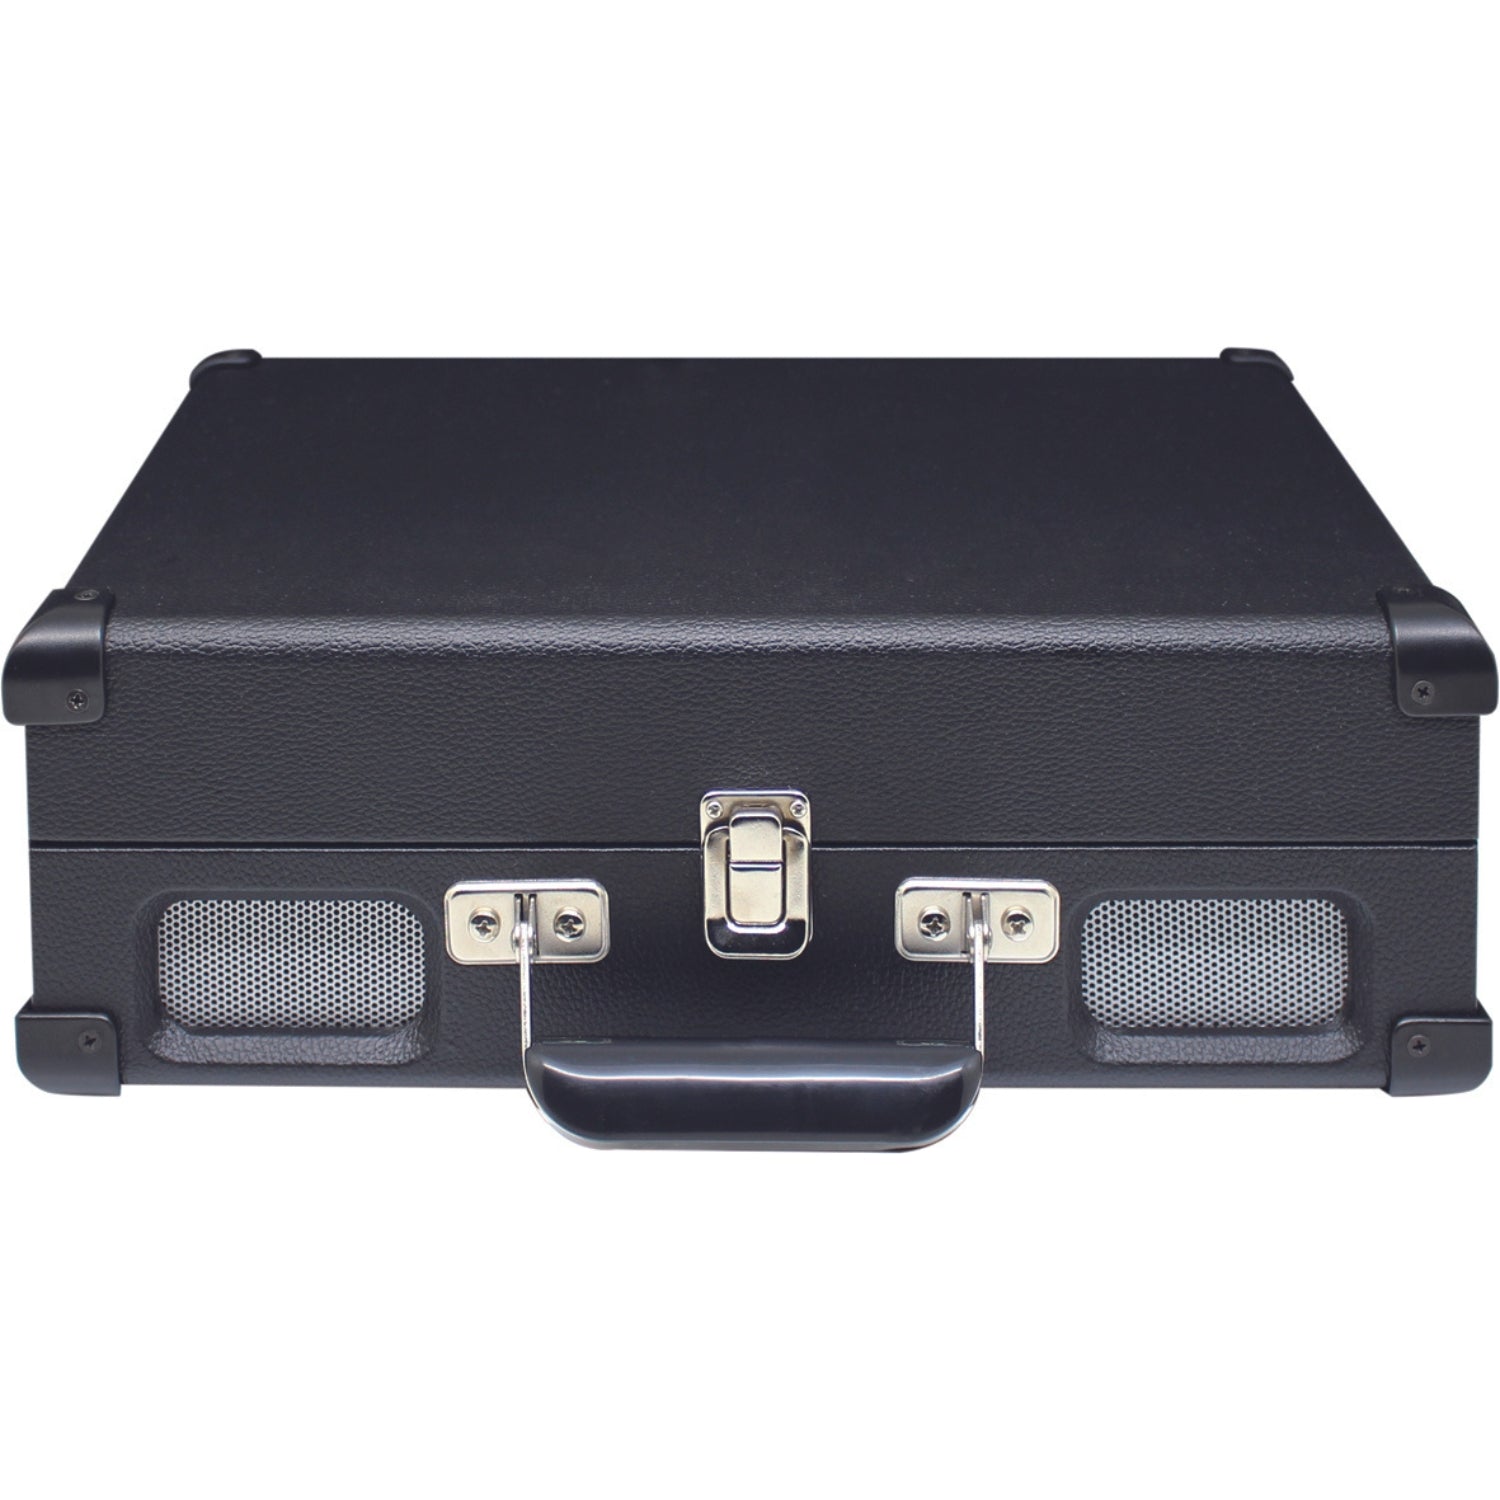 Soundmaster PL580 black nostalgia case turntable with headphone jack